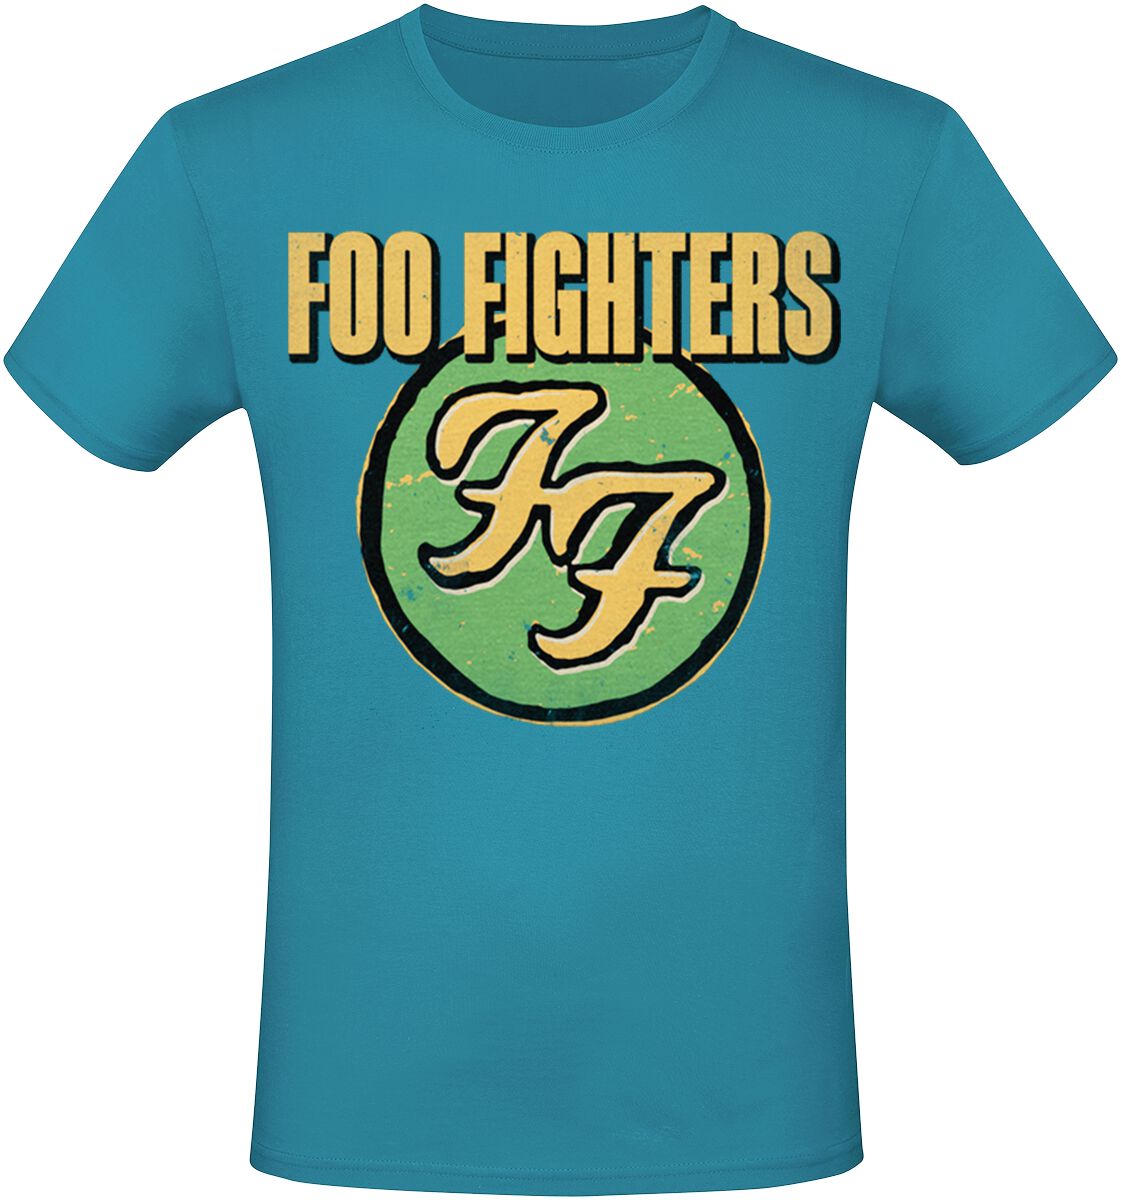 Foo Fighters Logo T-Shirt blau in M